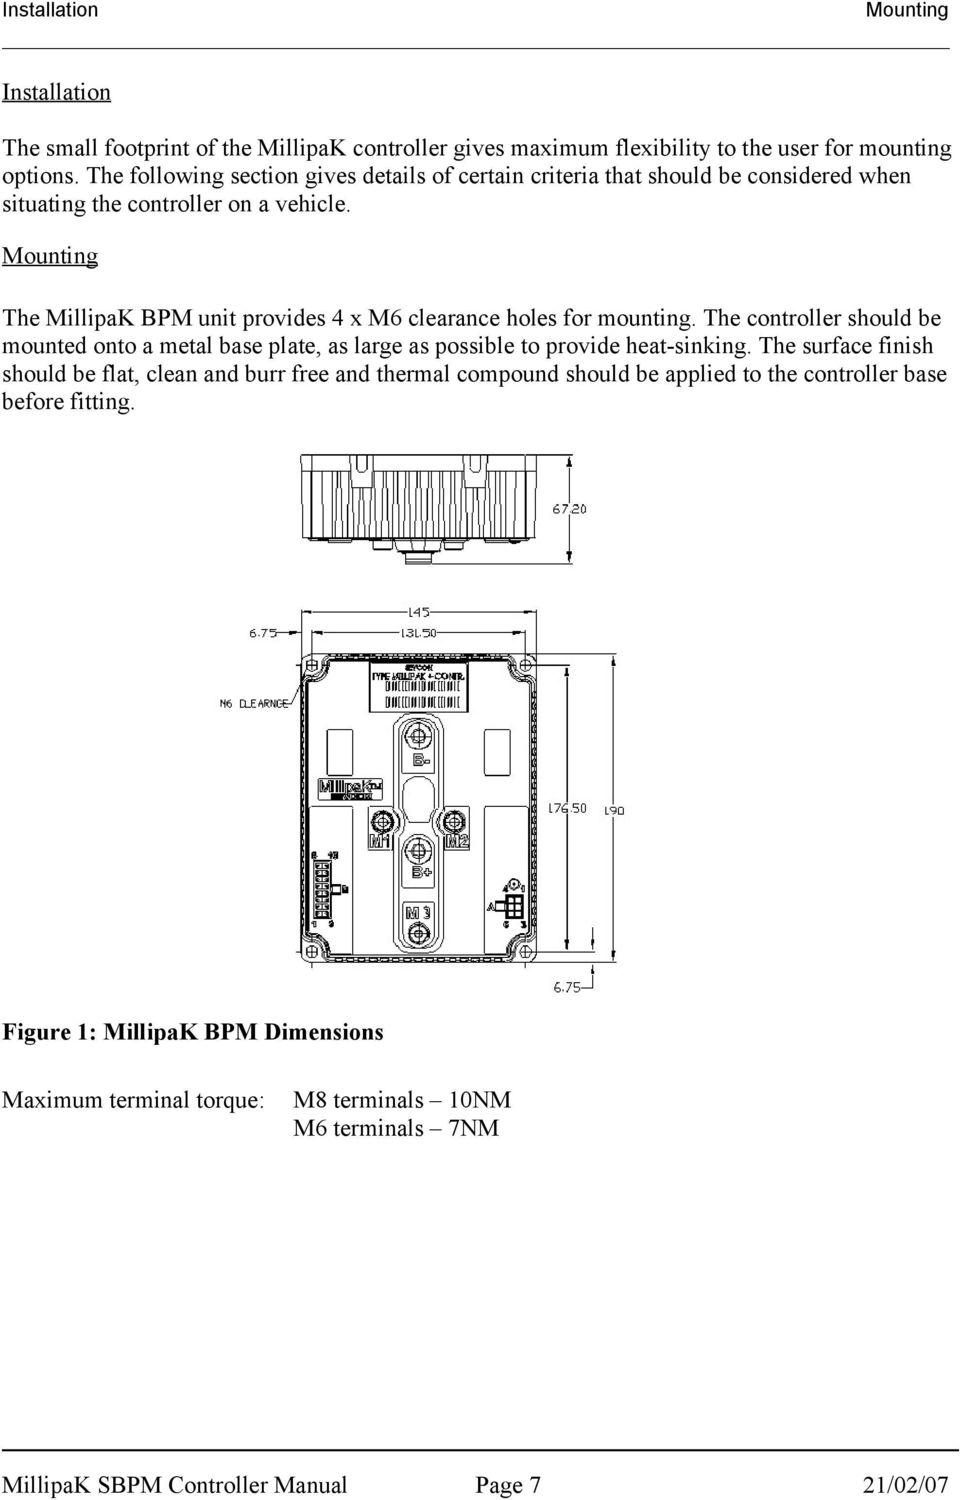 Millipak Sbpm Controller Manual For